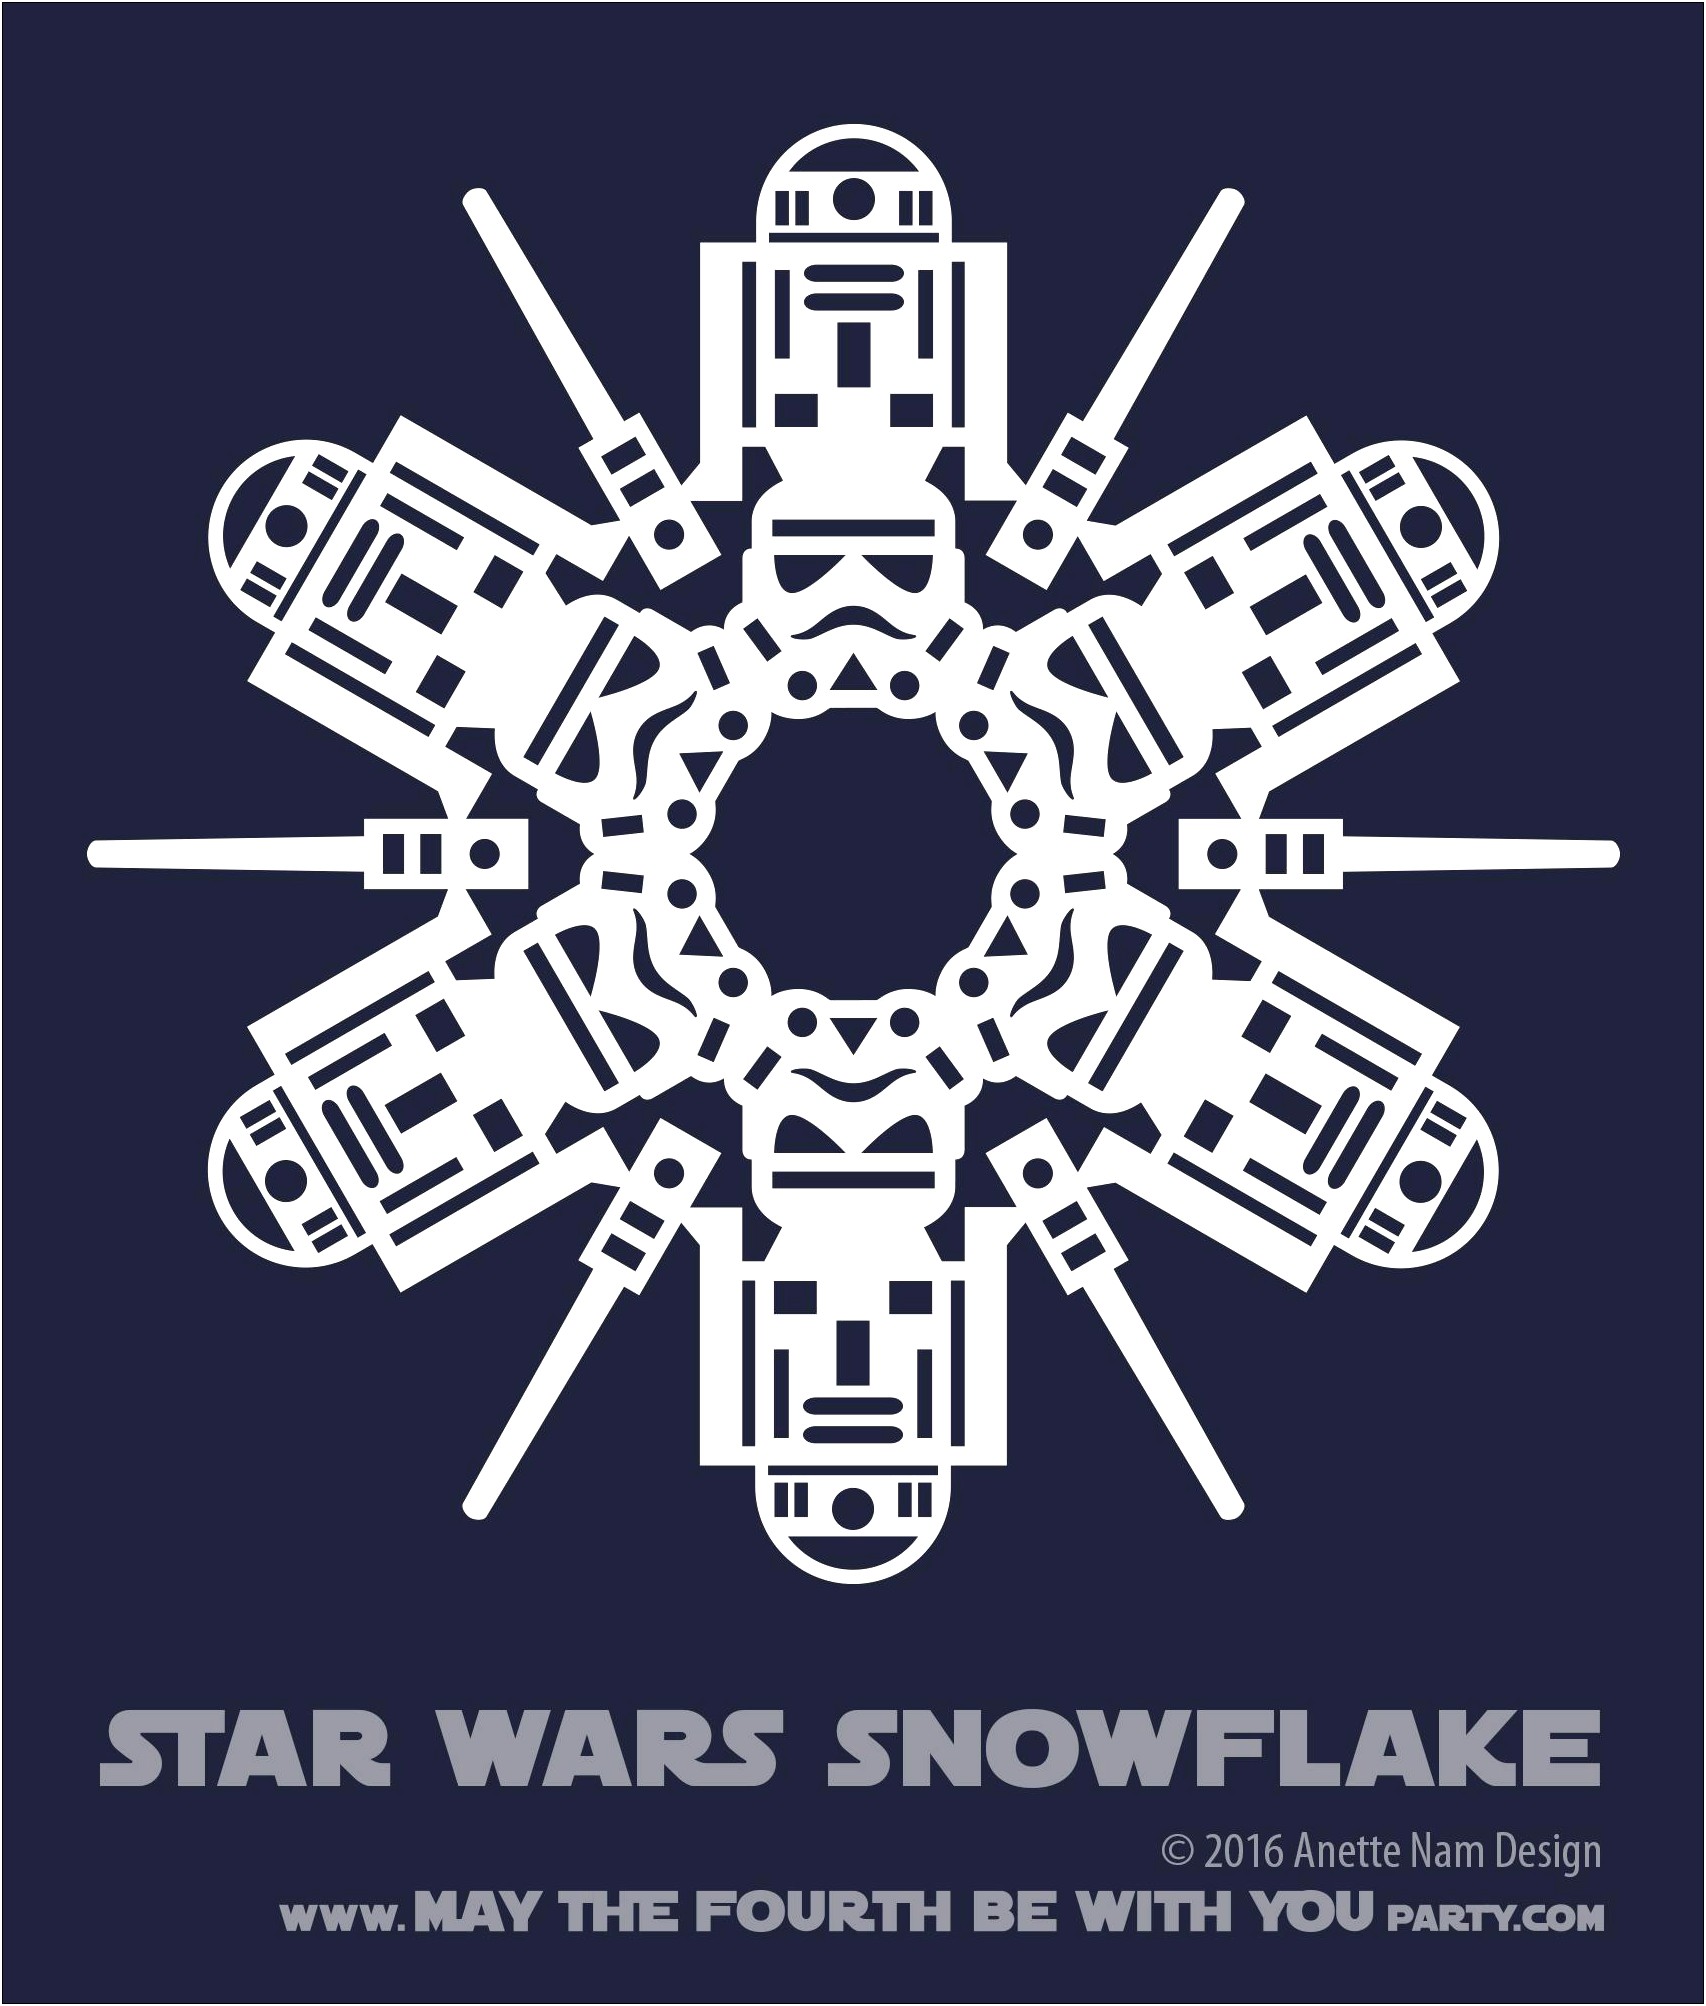 60 Free Star Wars Snowflake Templates